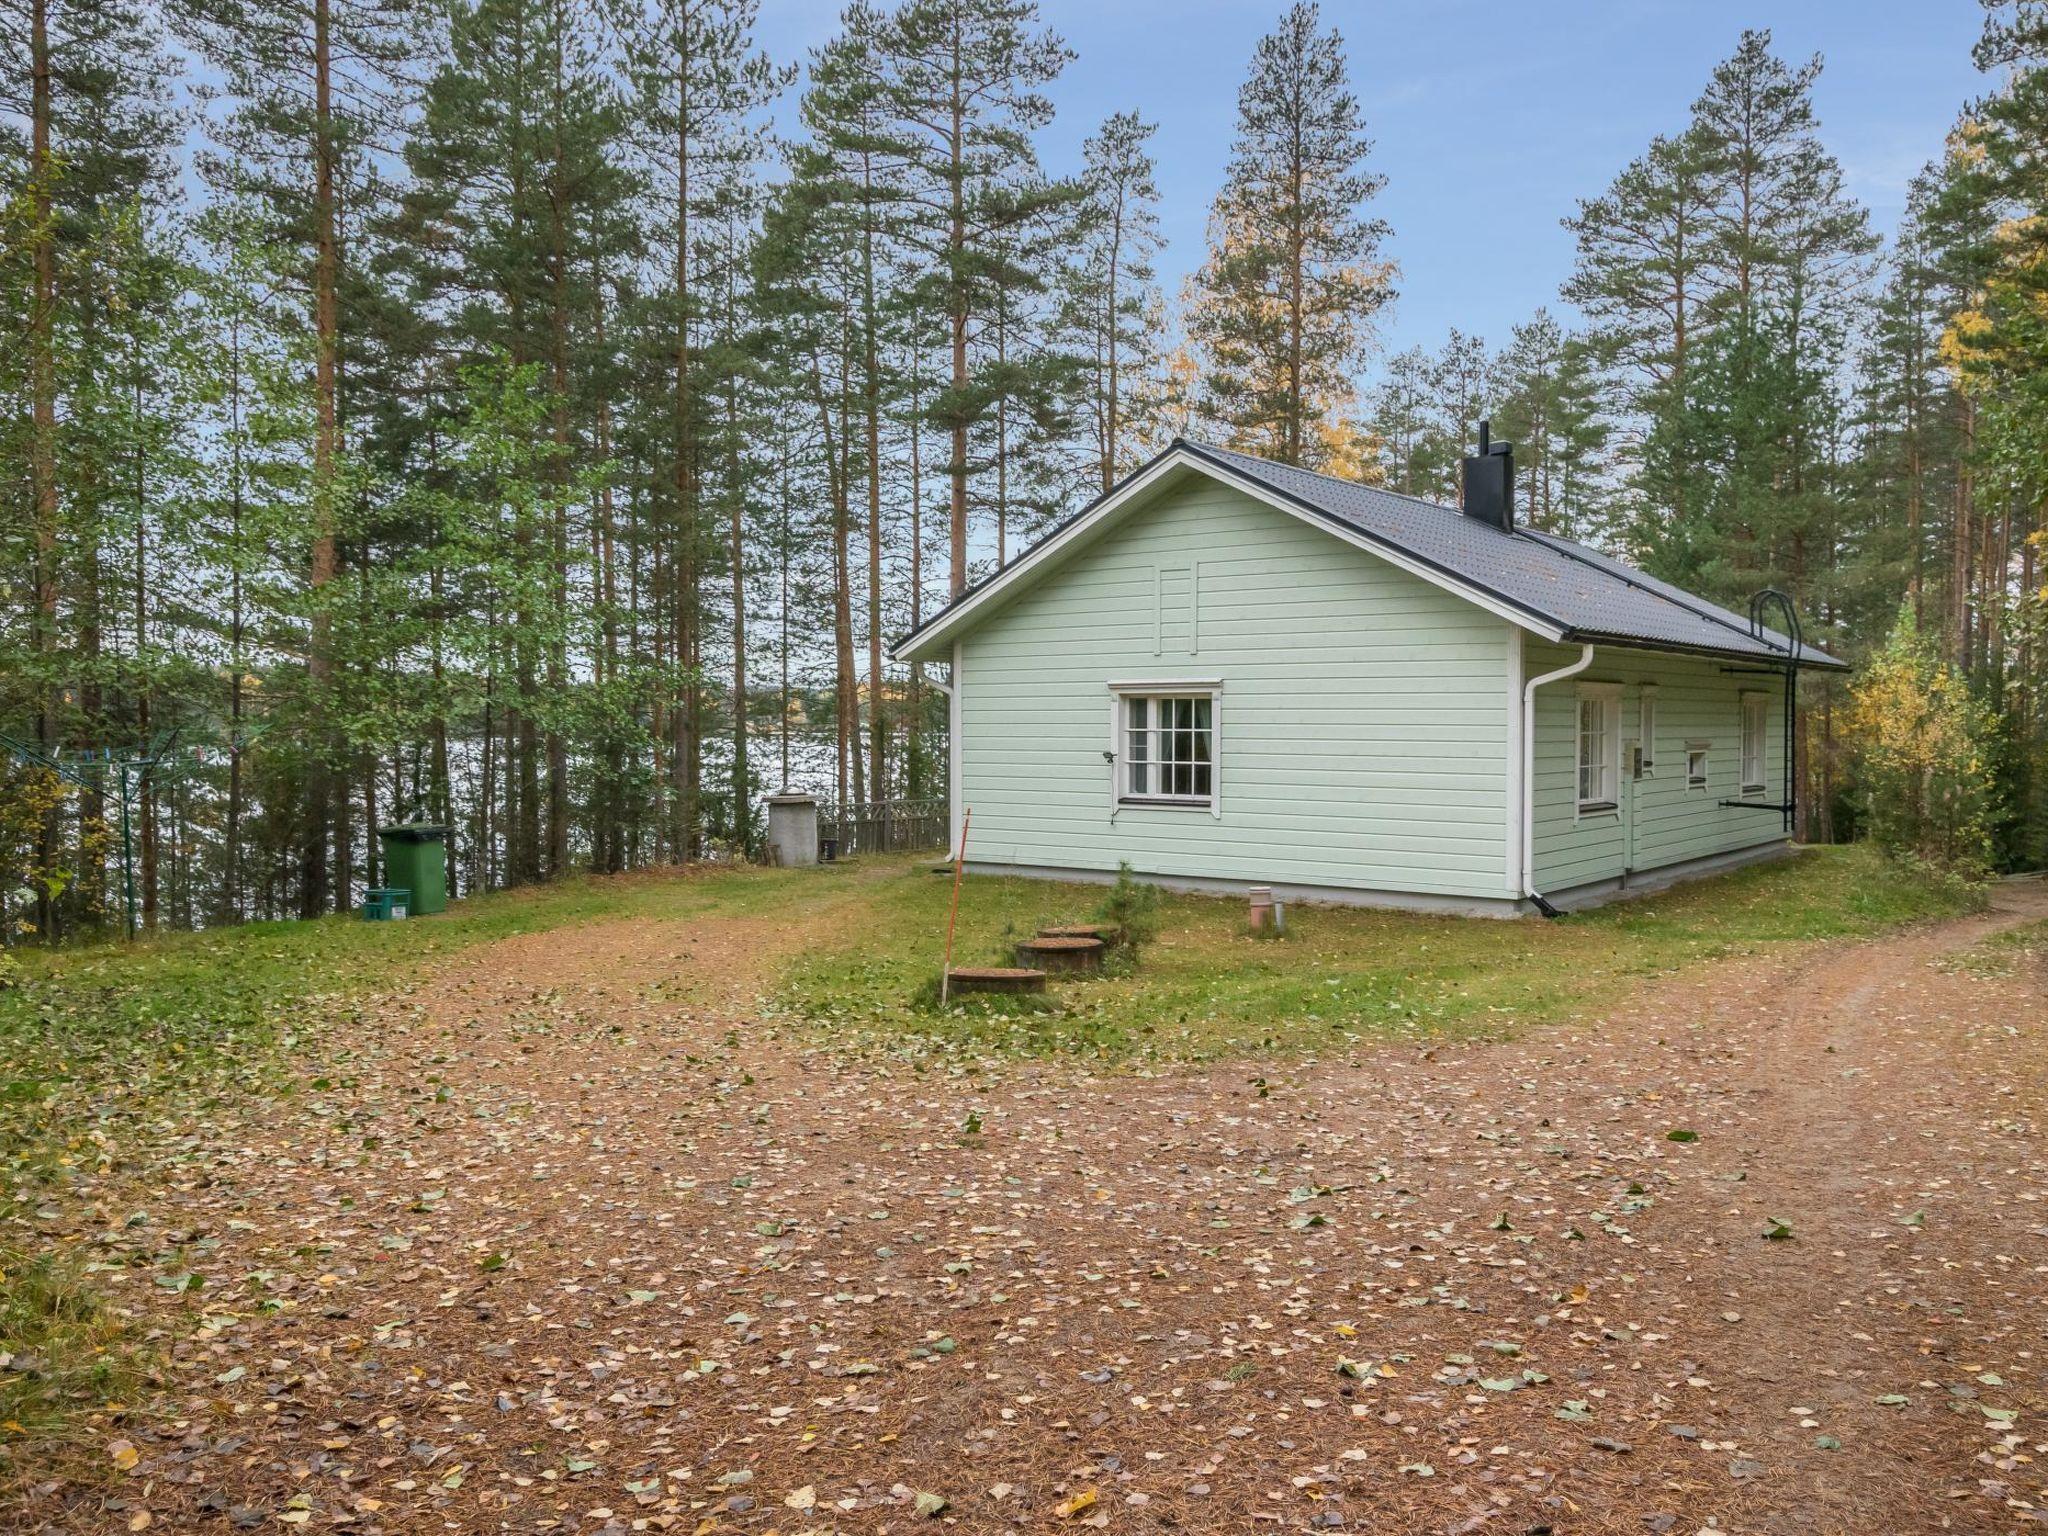 Photo 4 - 2 bedroom House in Savonlinna with sauna